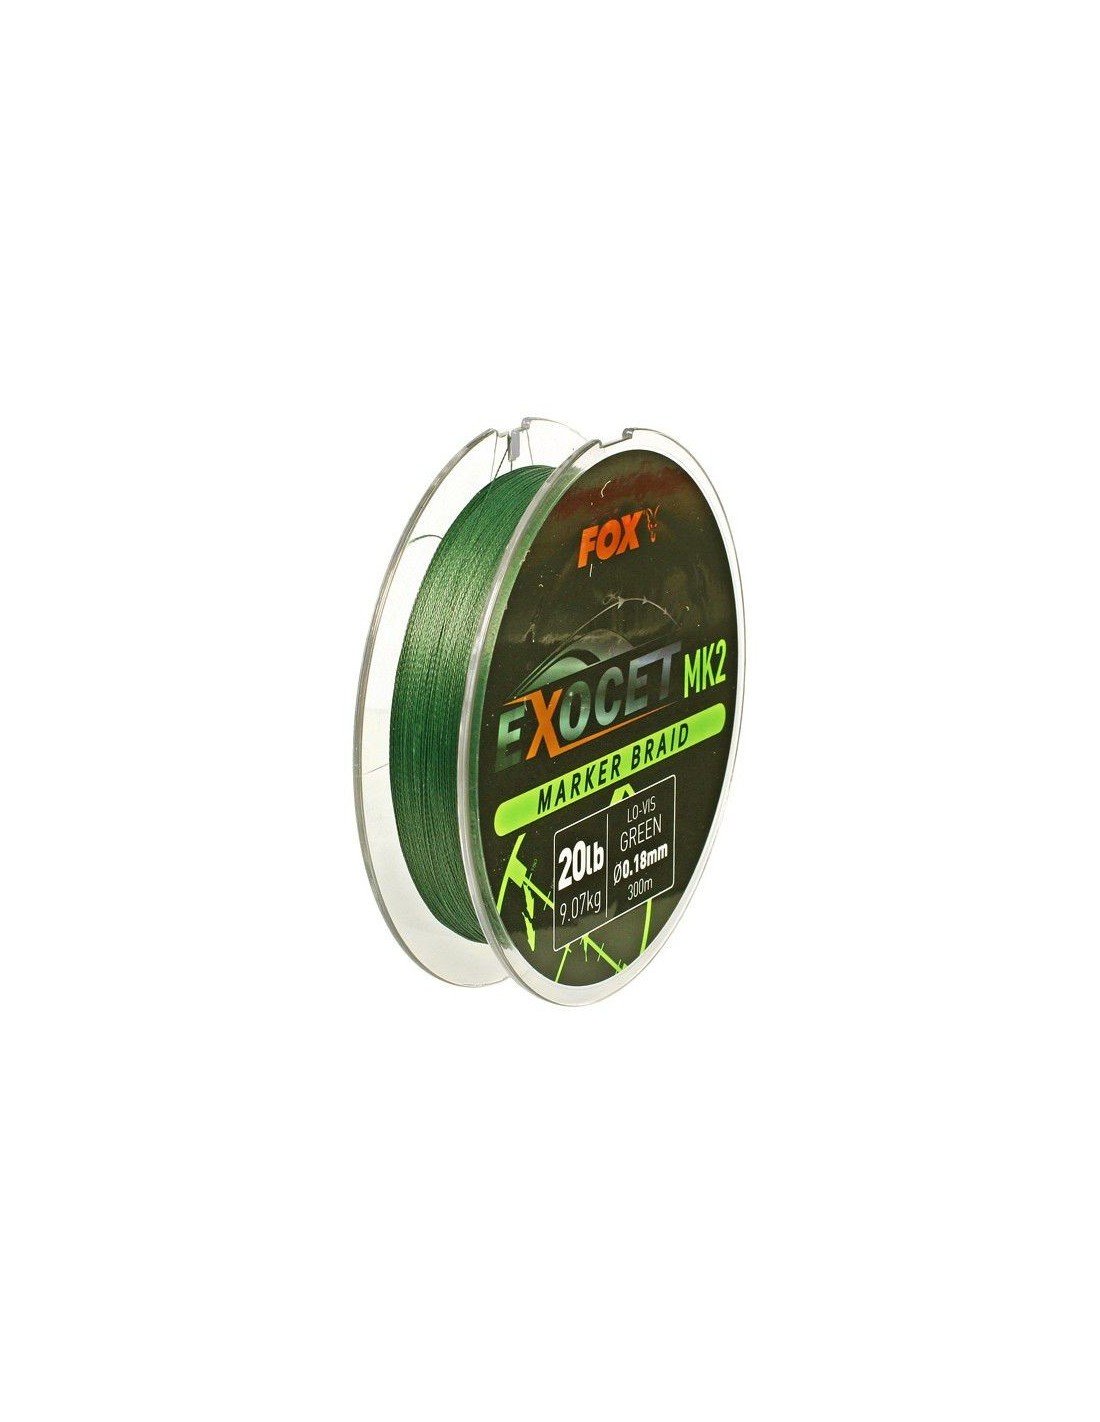 Fox Exocet MK2 Marker Braid 0.18мм - 300м плетено влакно за маркер